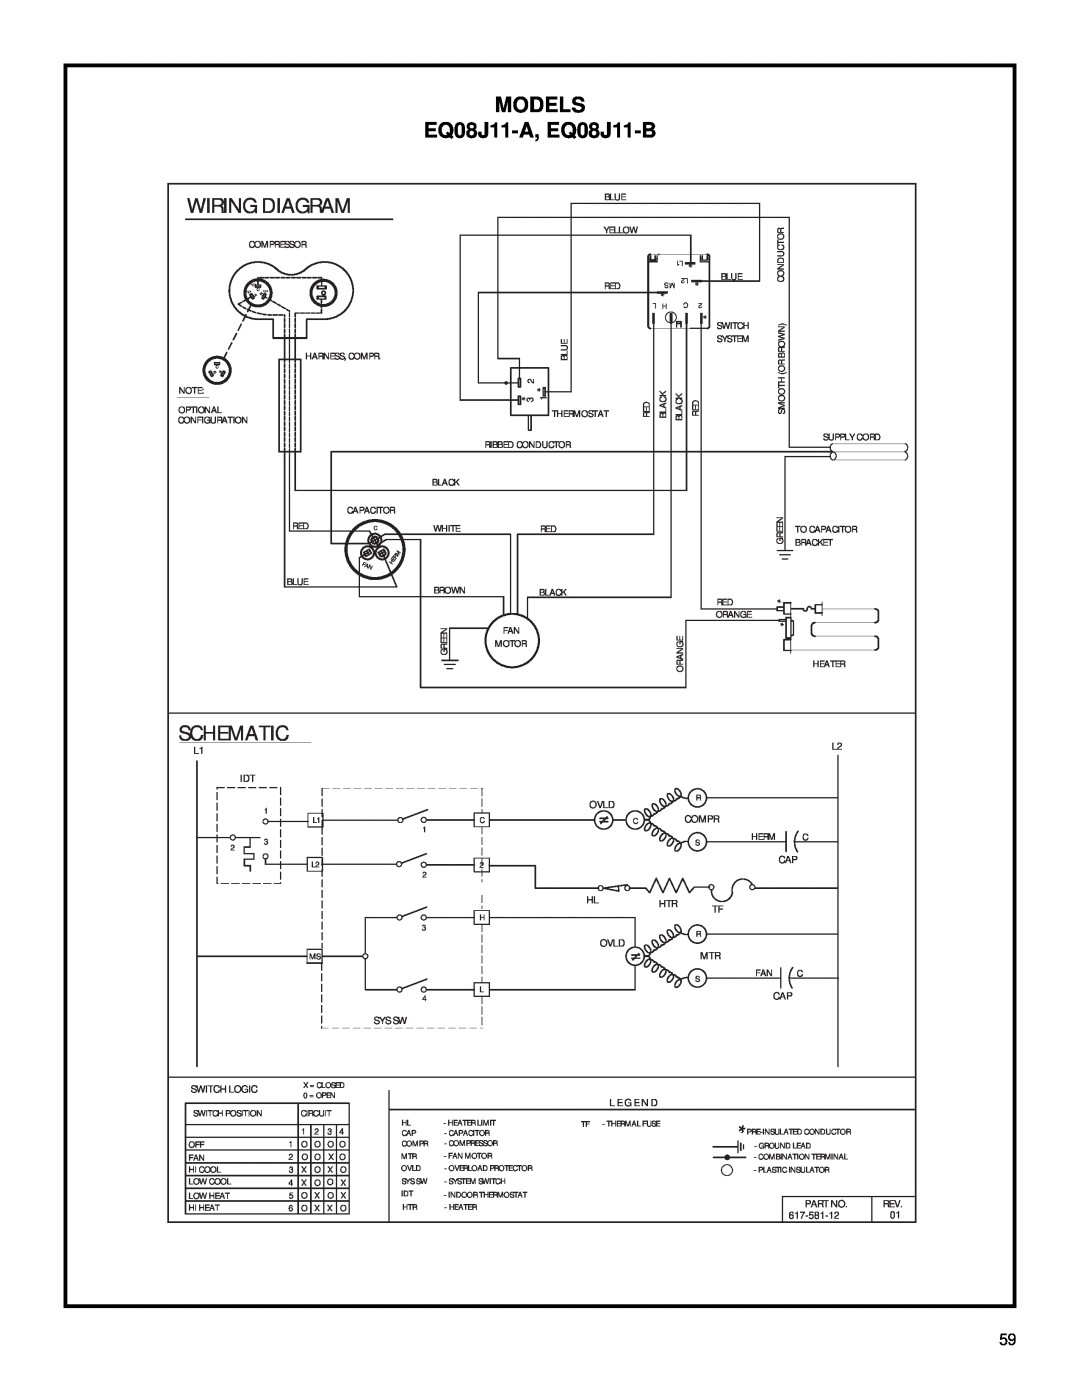 Friedrich 2003 service manual EQ08J11-A, EQ08J11-B, Wiring Diagram, Models, Schematic 